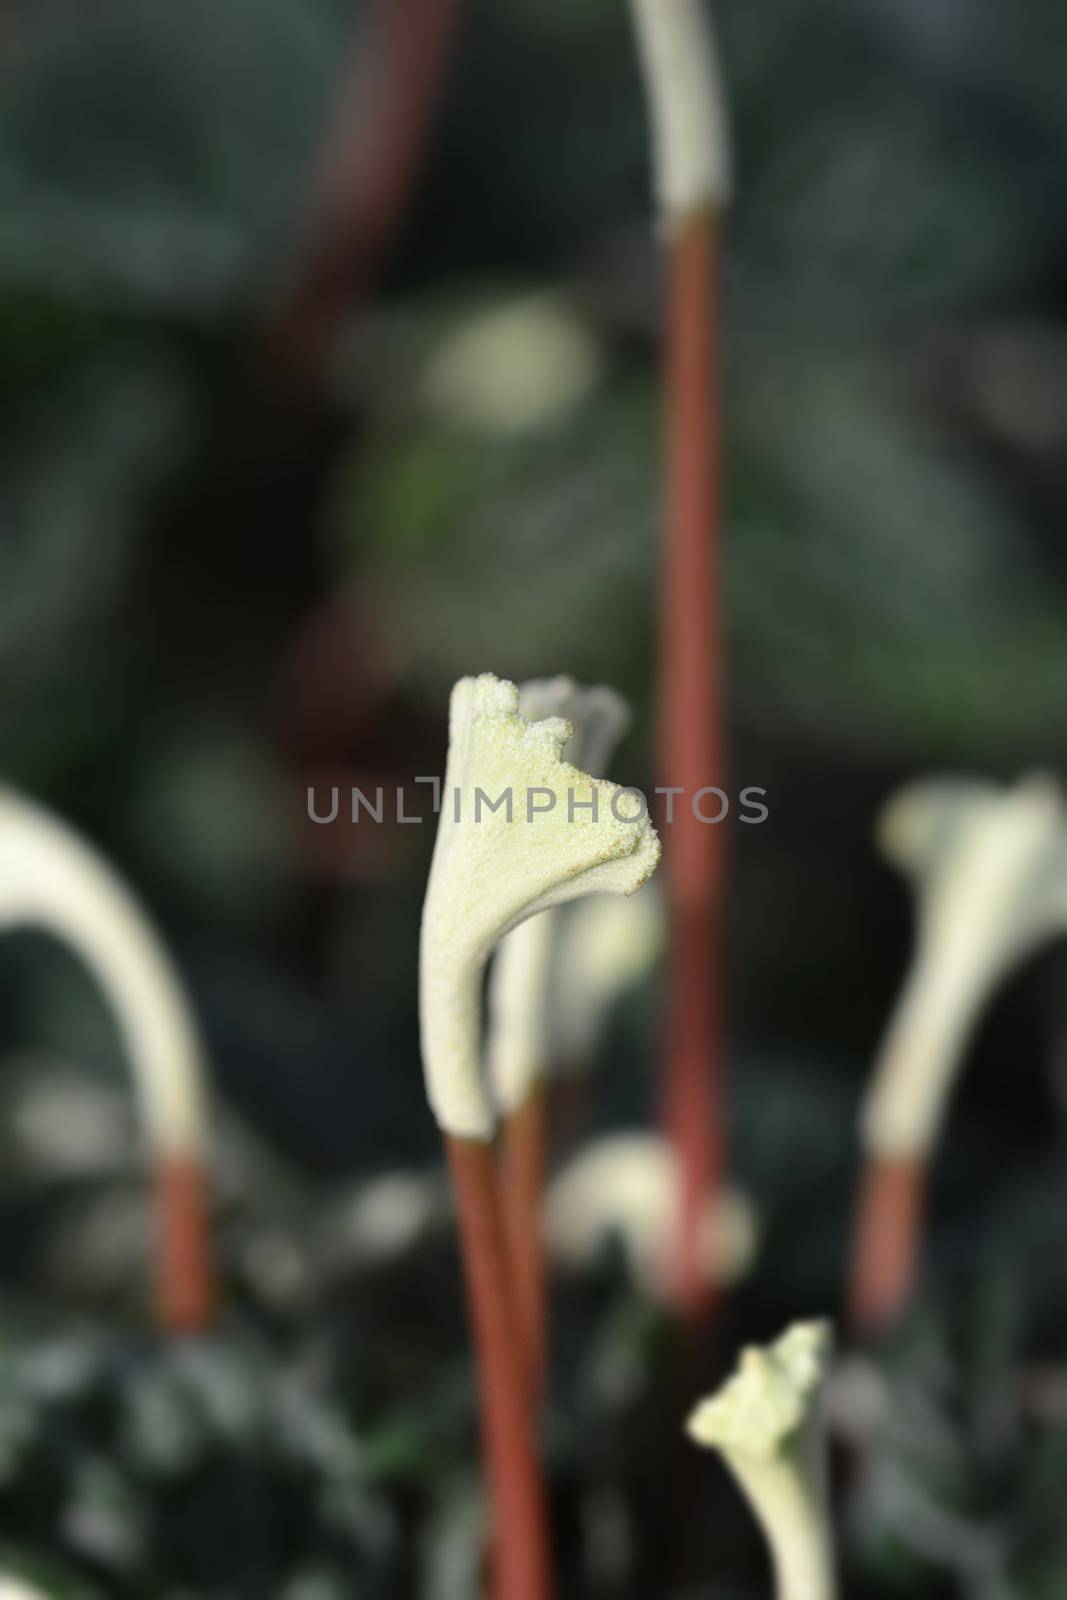 Radiator plant Lilian flowers - Latin name - Peperomia caperata Lilian